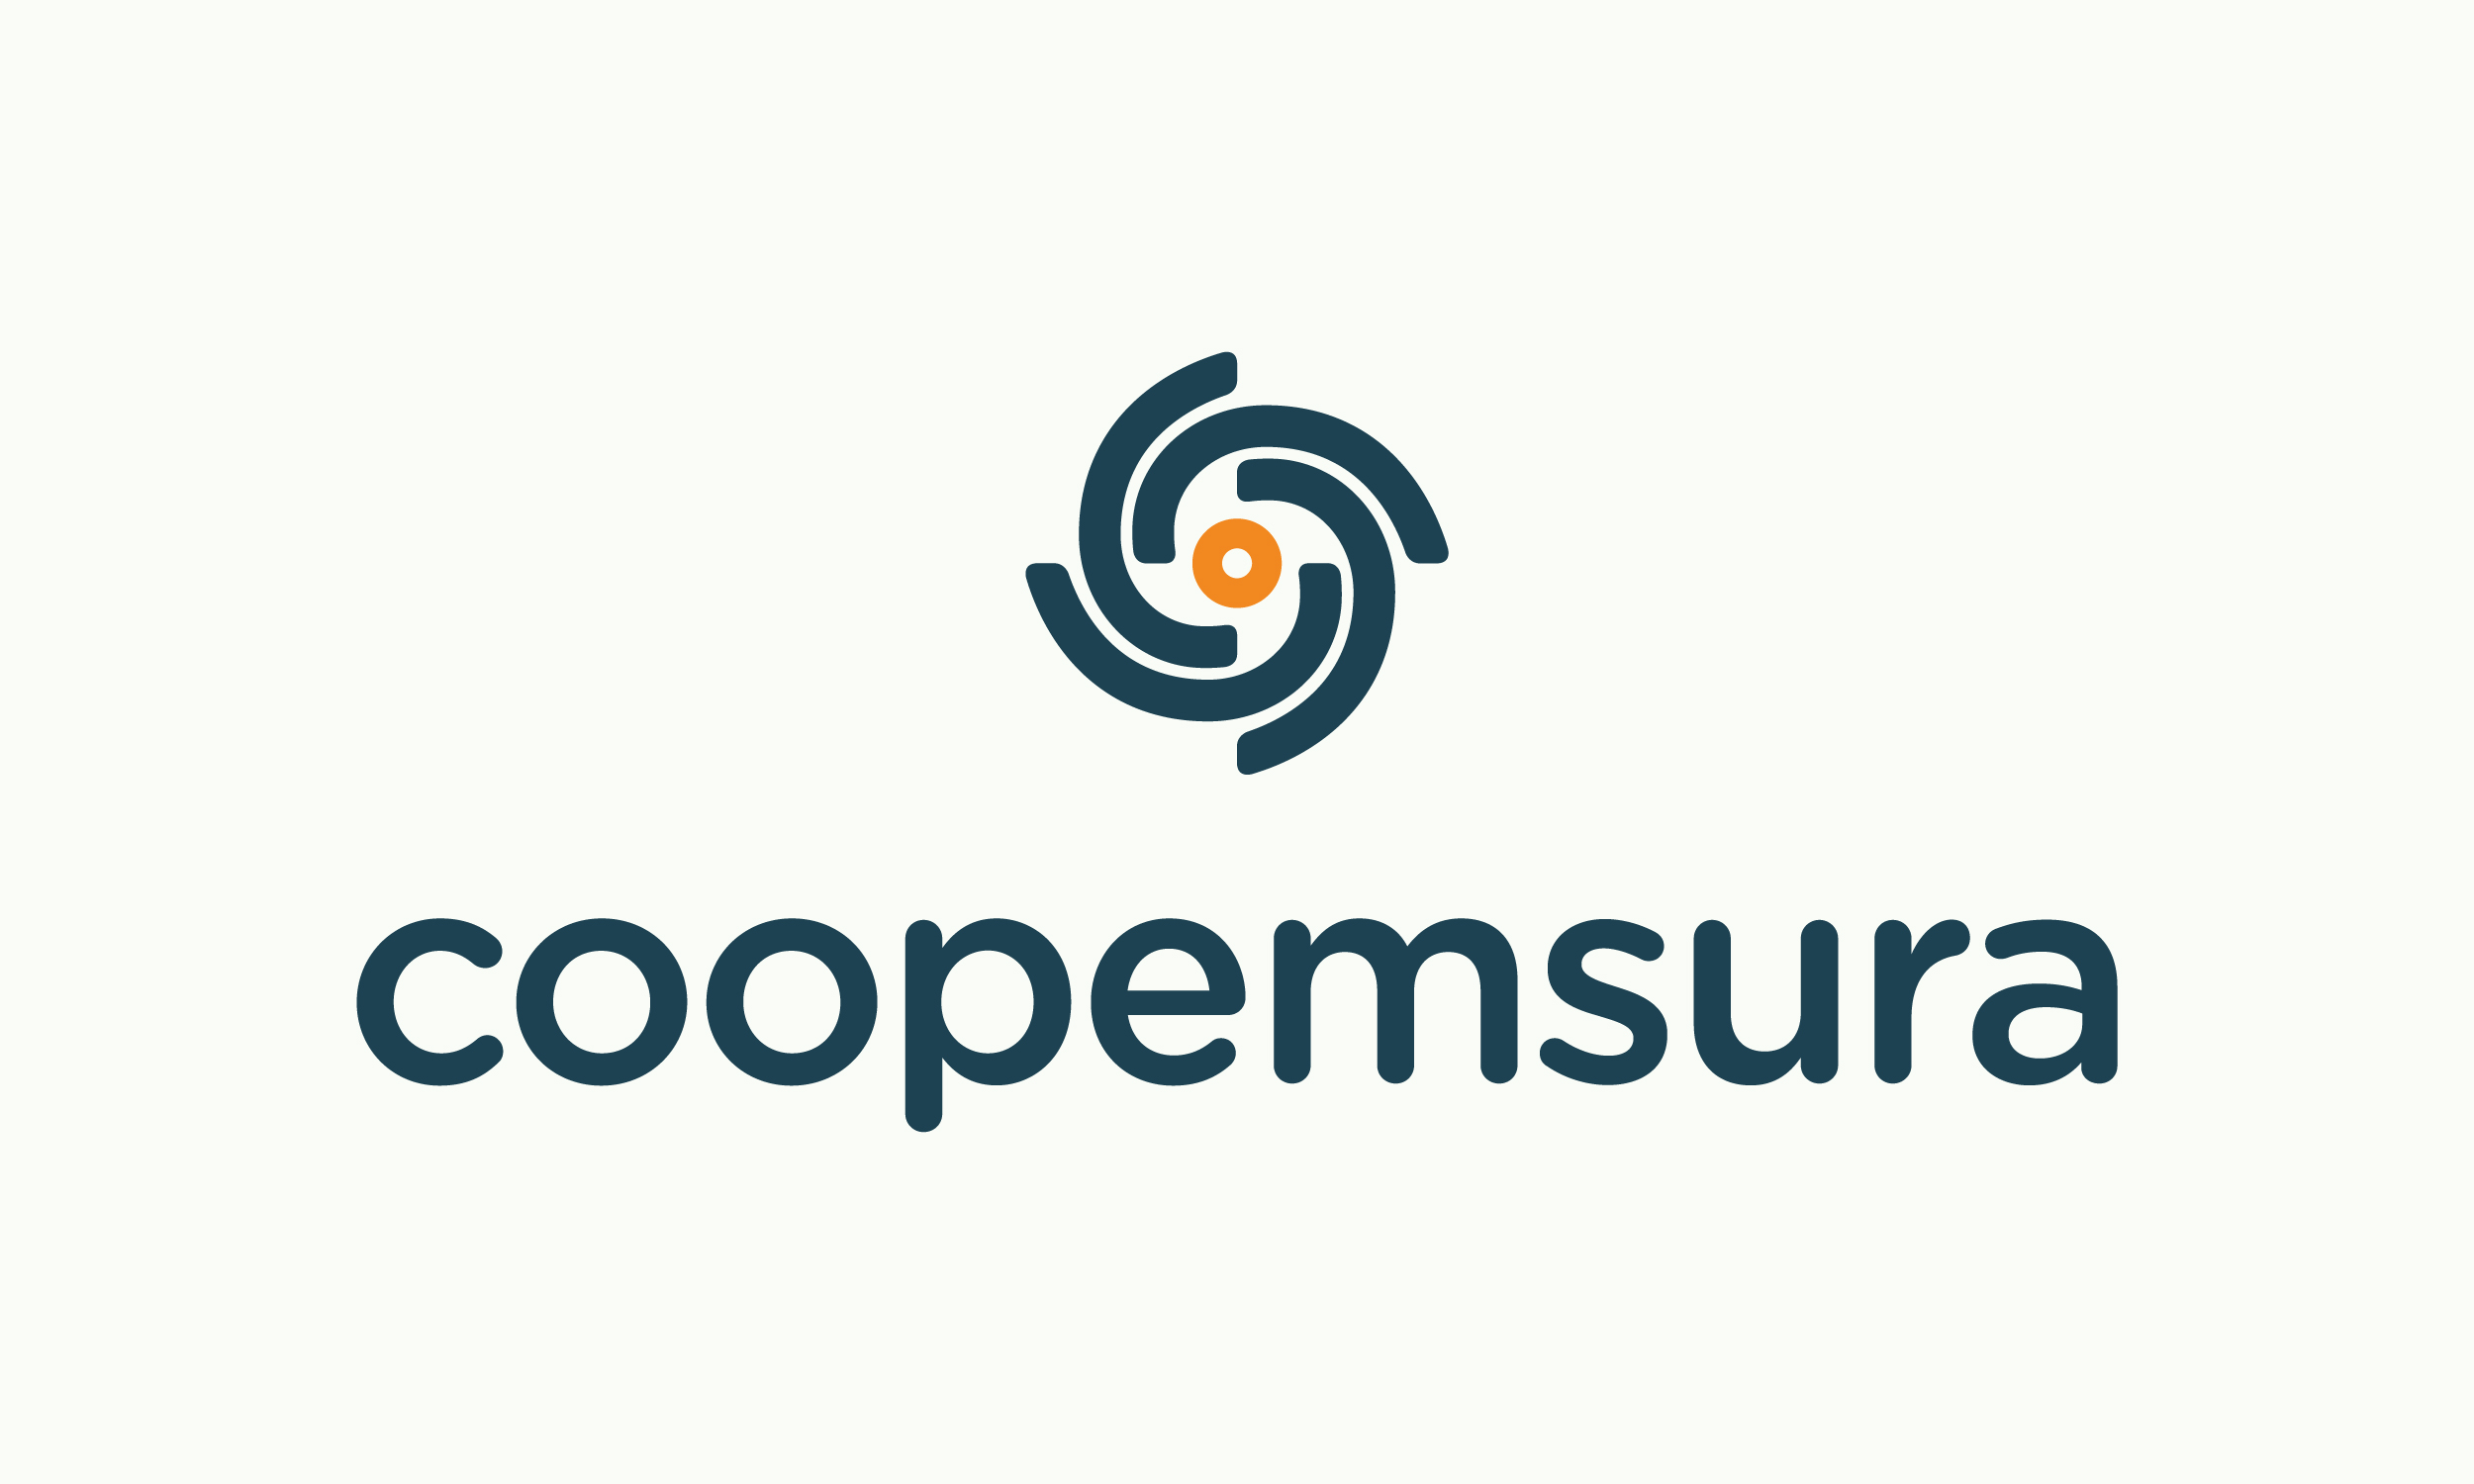 Coopemsura